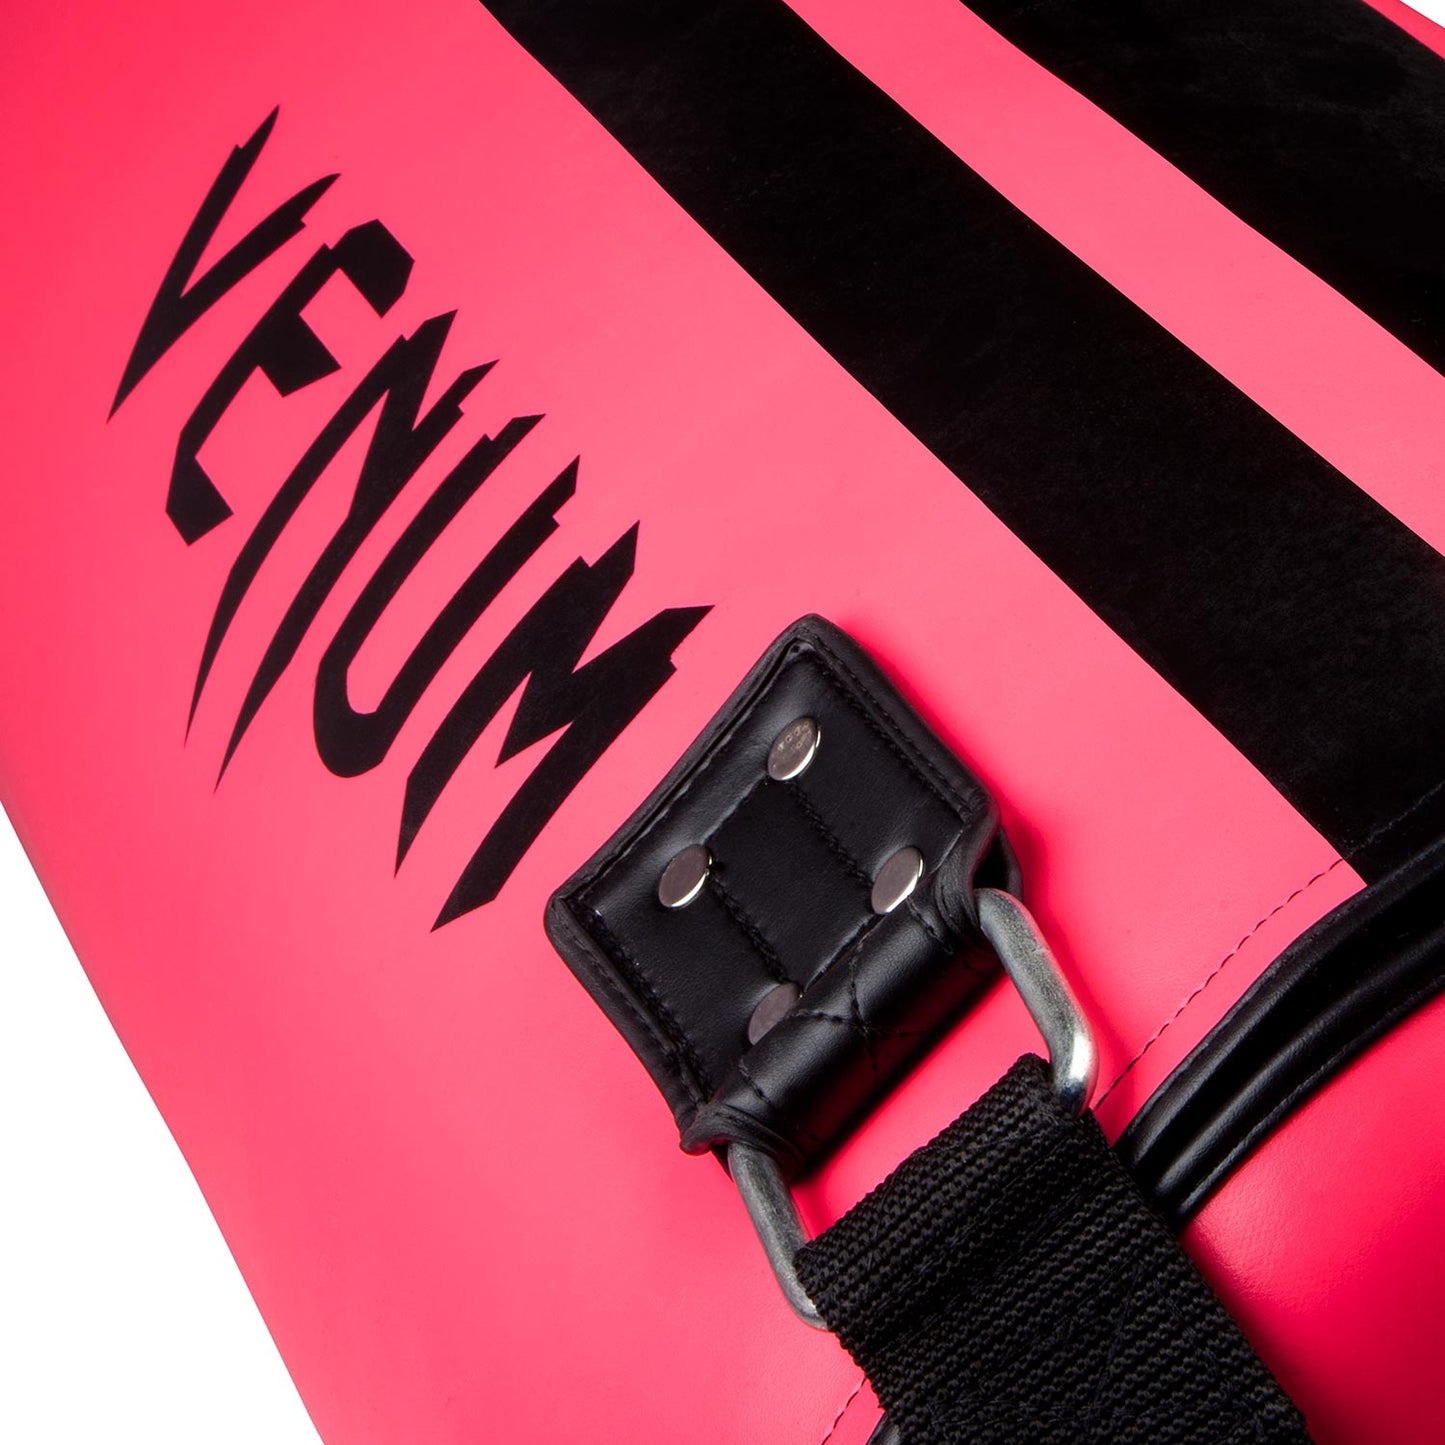 Venum Hurricane Punching Bag - Filled - 170 cm - Black/Pink